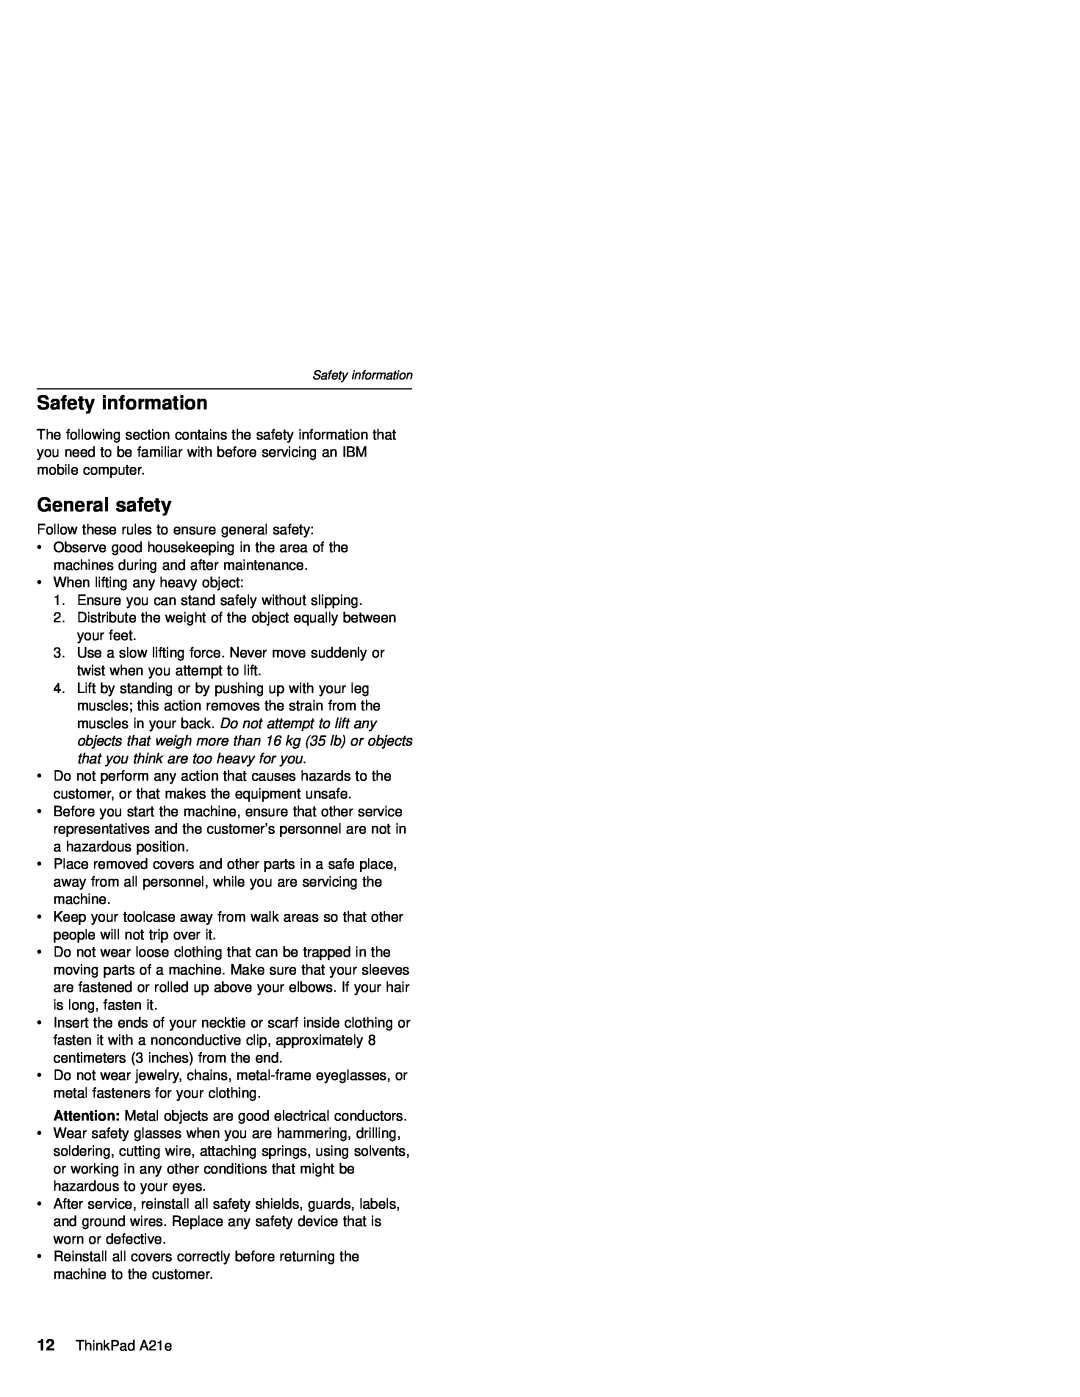 IBM MT 2632 manual Safety information, General safety 